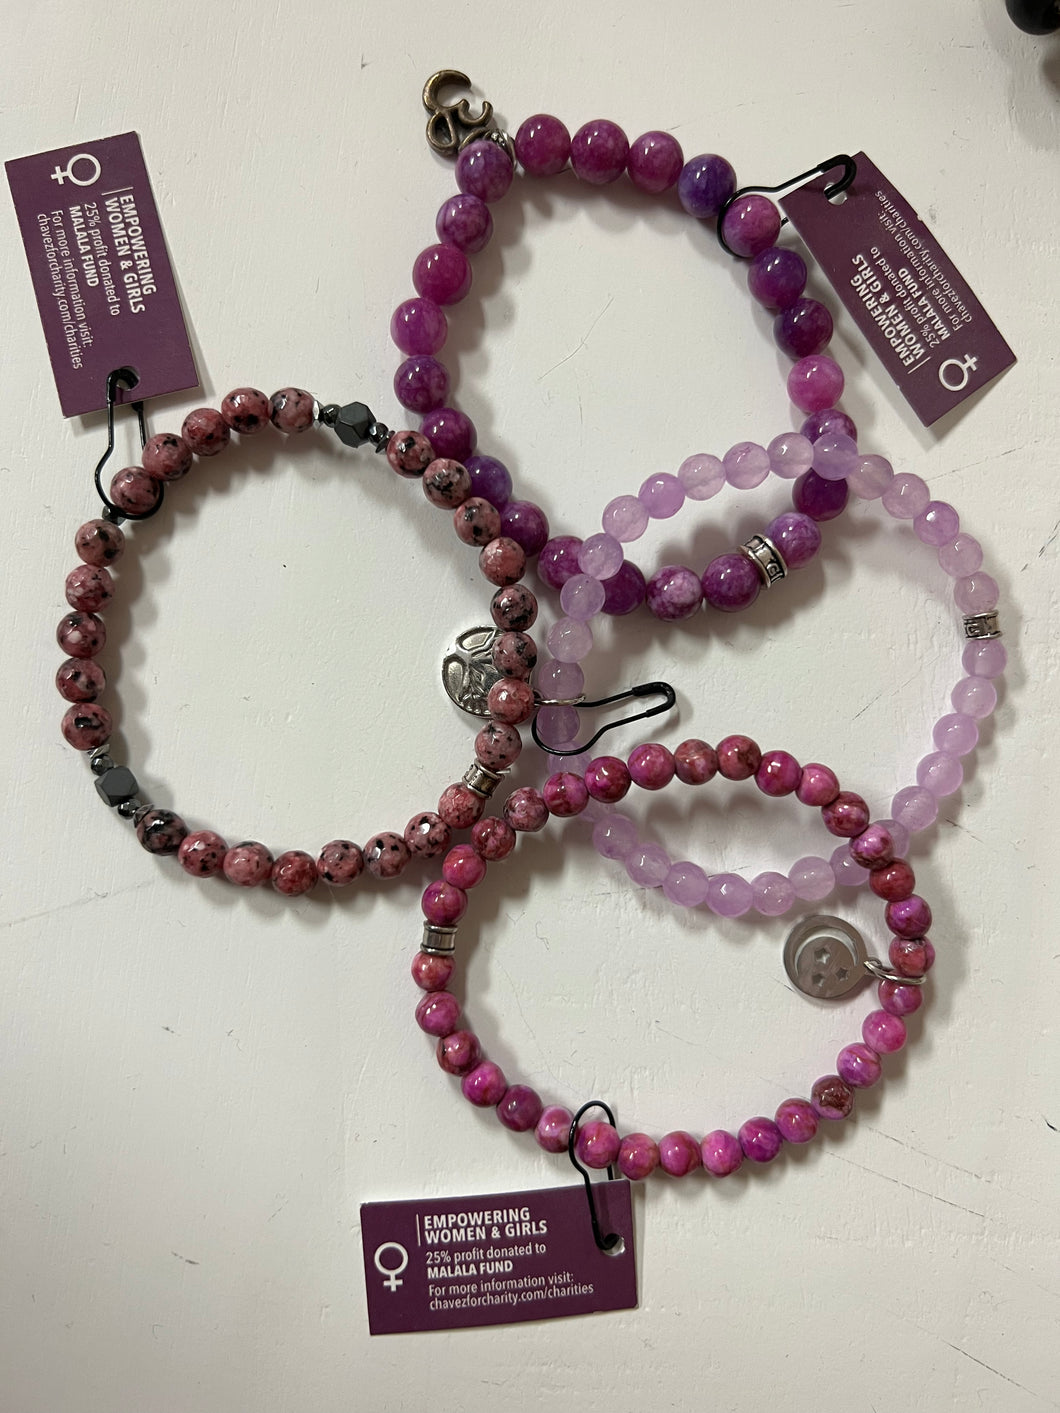 Chavez for Charity - Empowering Women & Girls Purple Bracelet